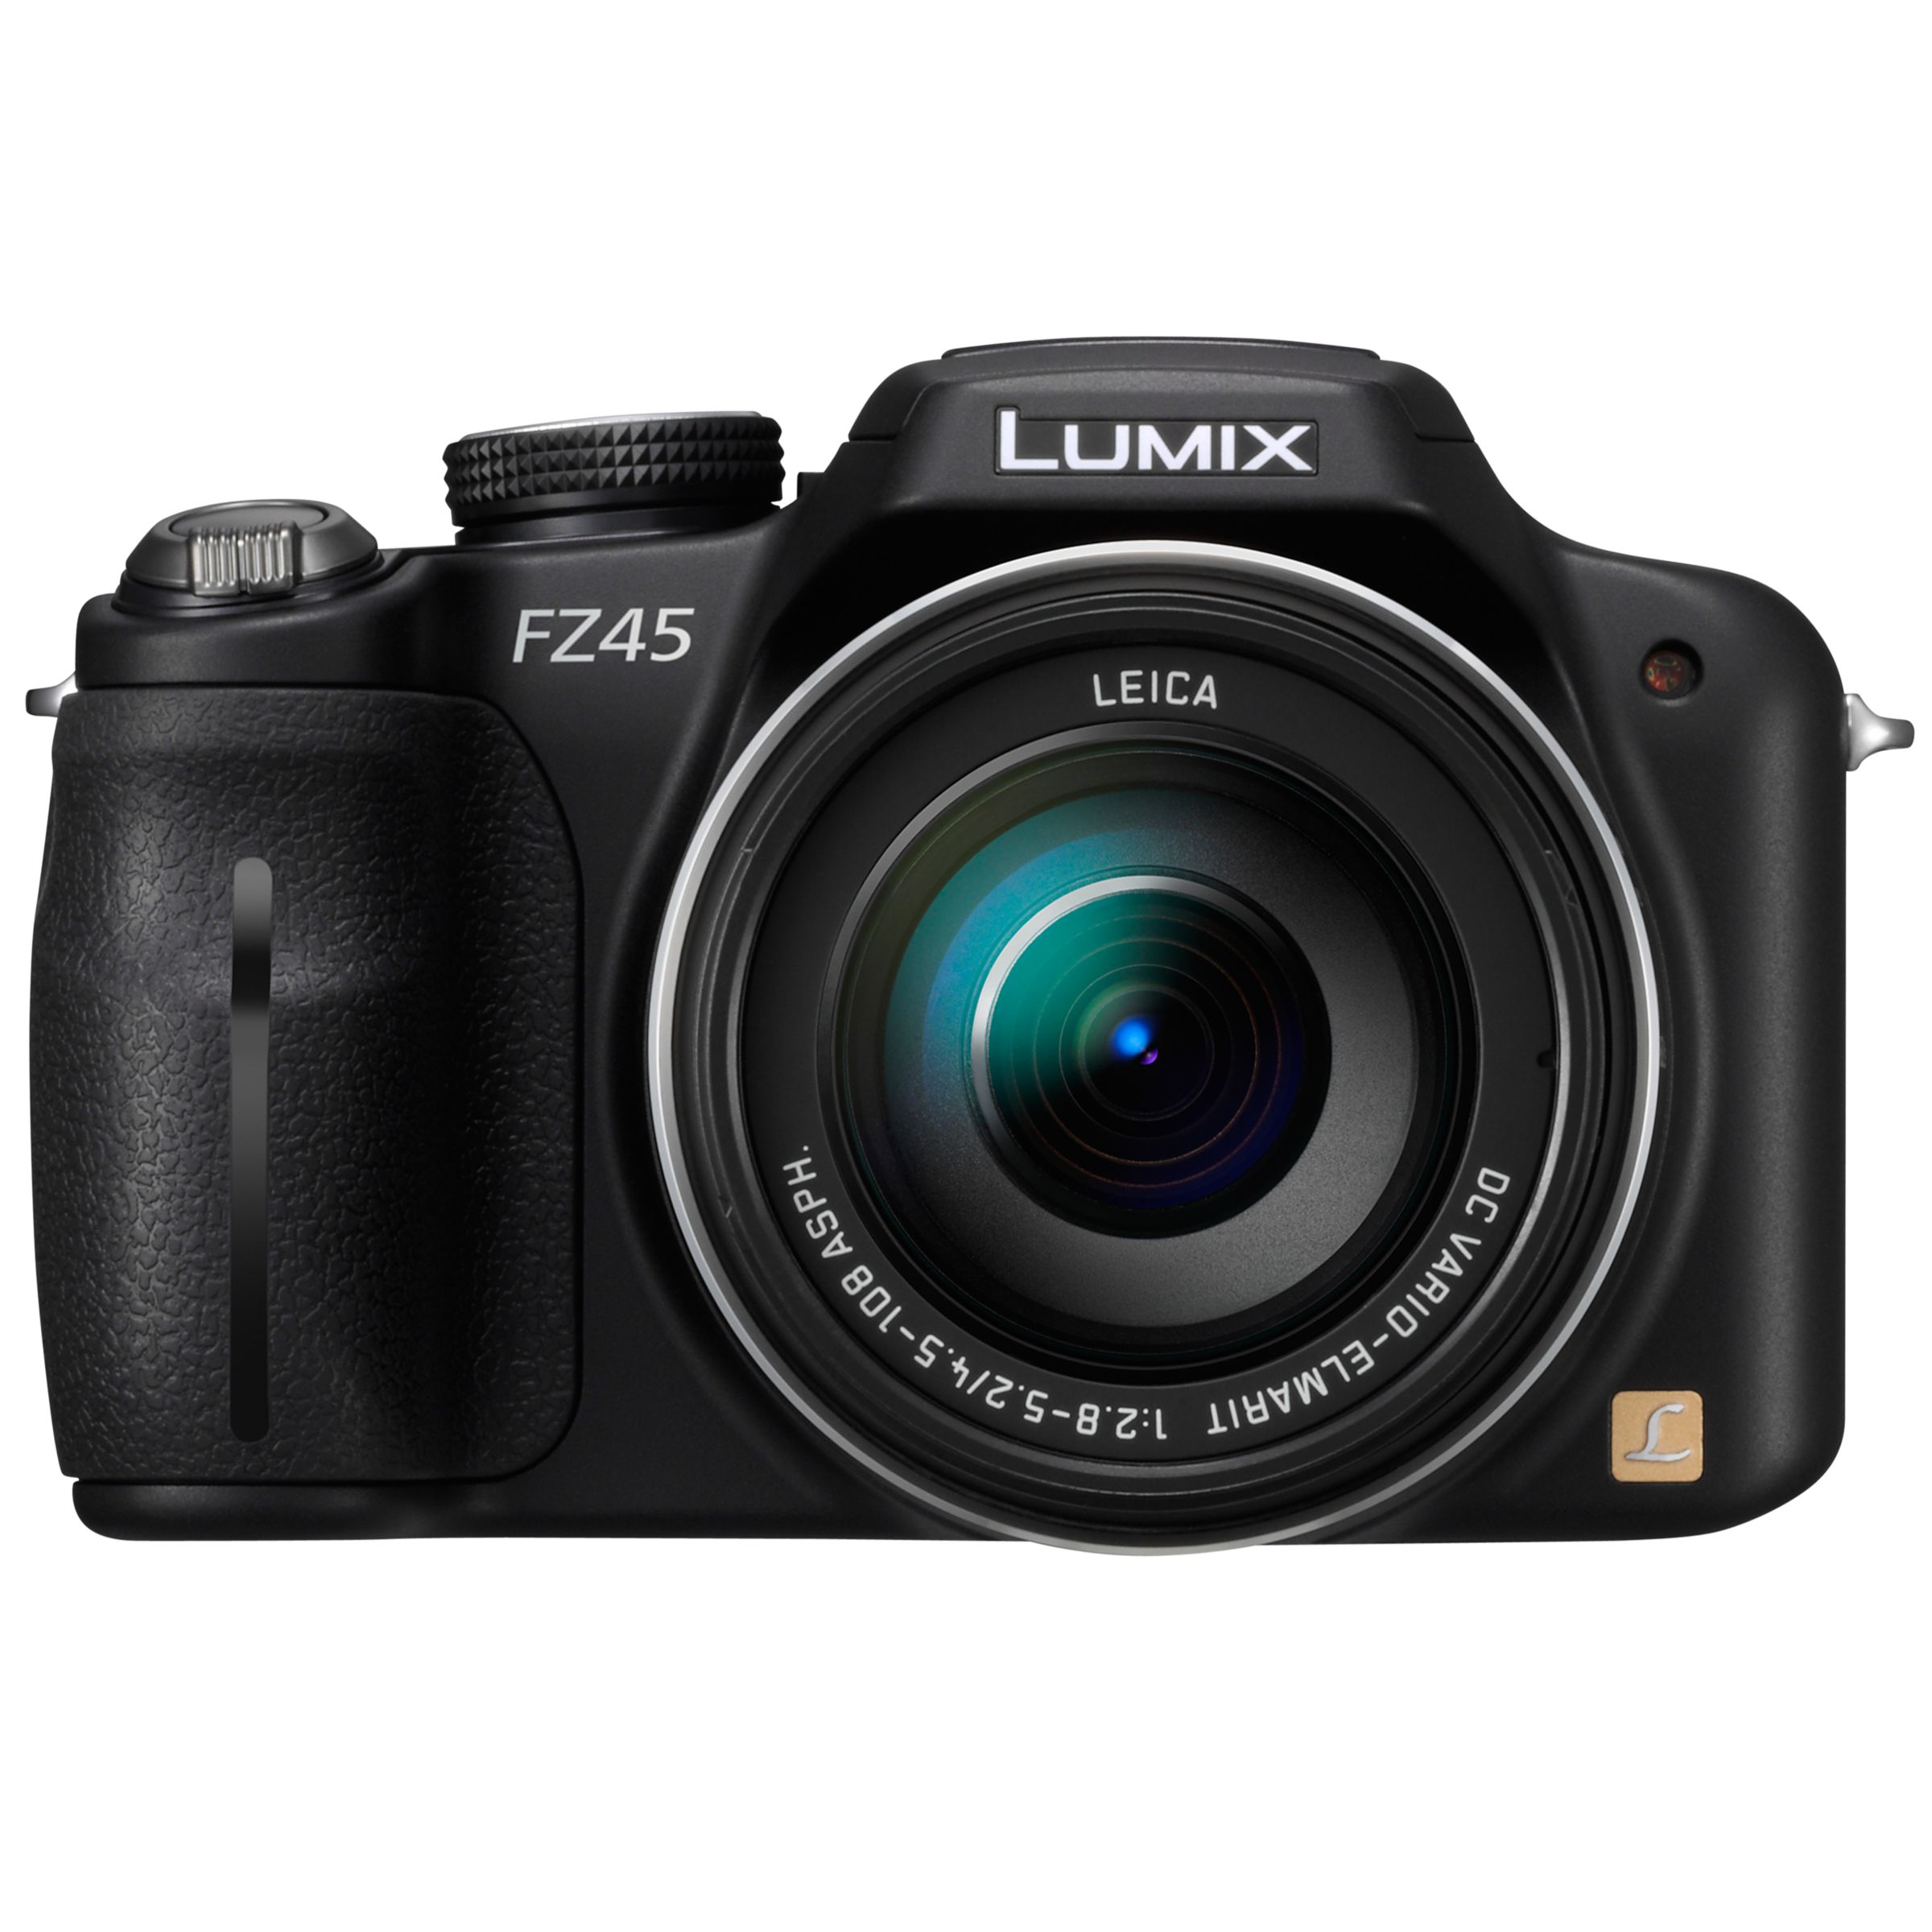 Panasonic Lumix DMC-FZ45 Digital Camera, Black at JohnLewis